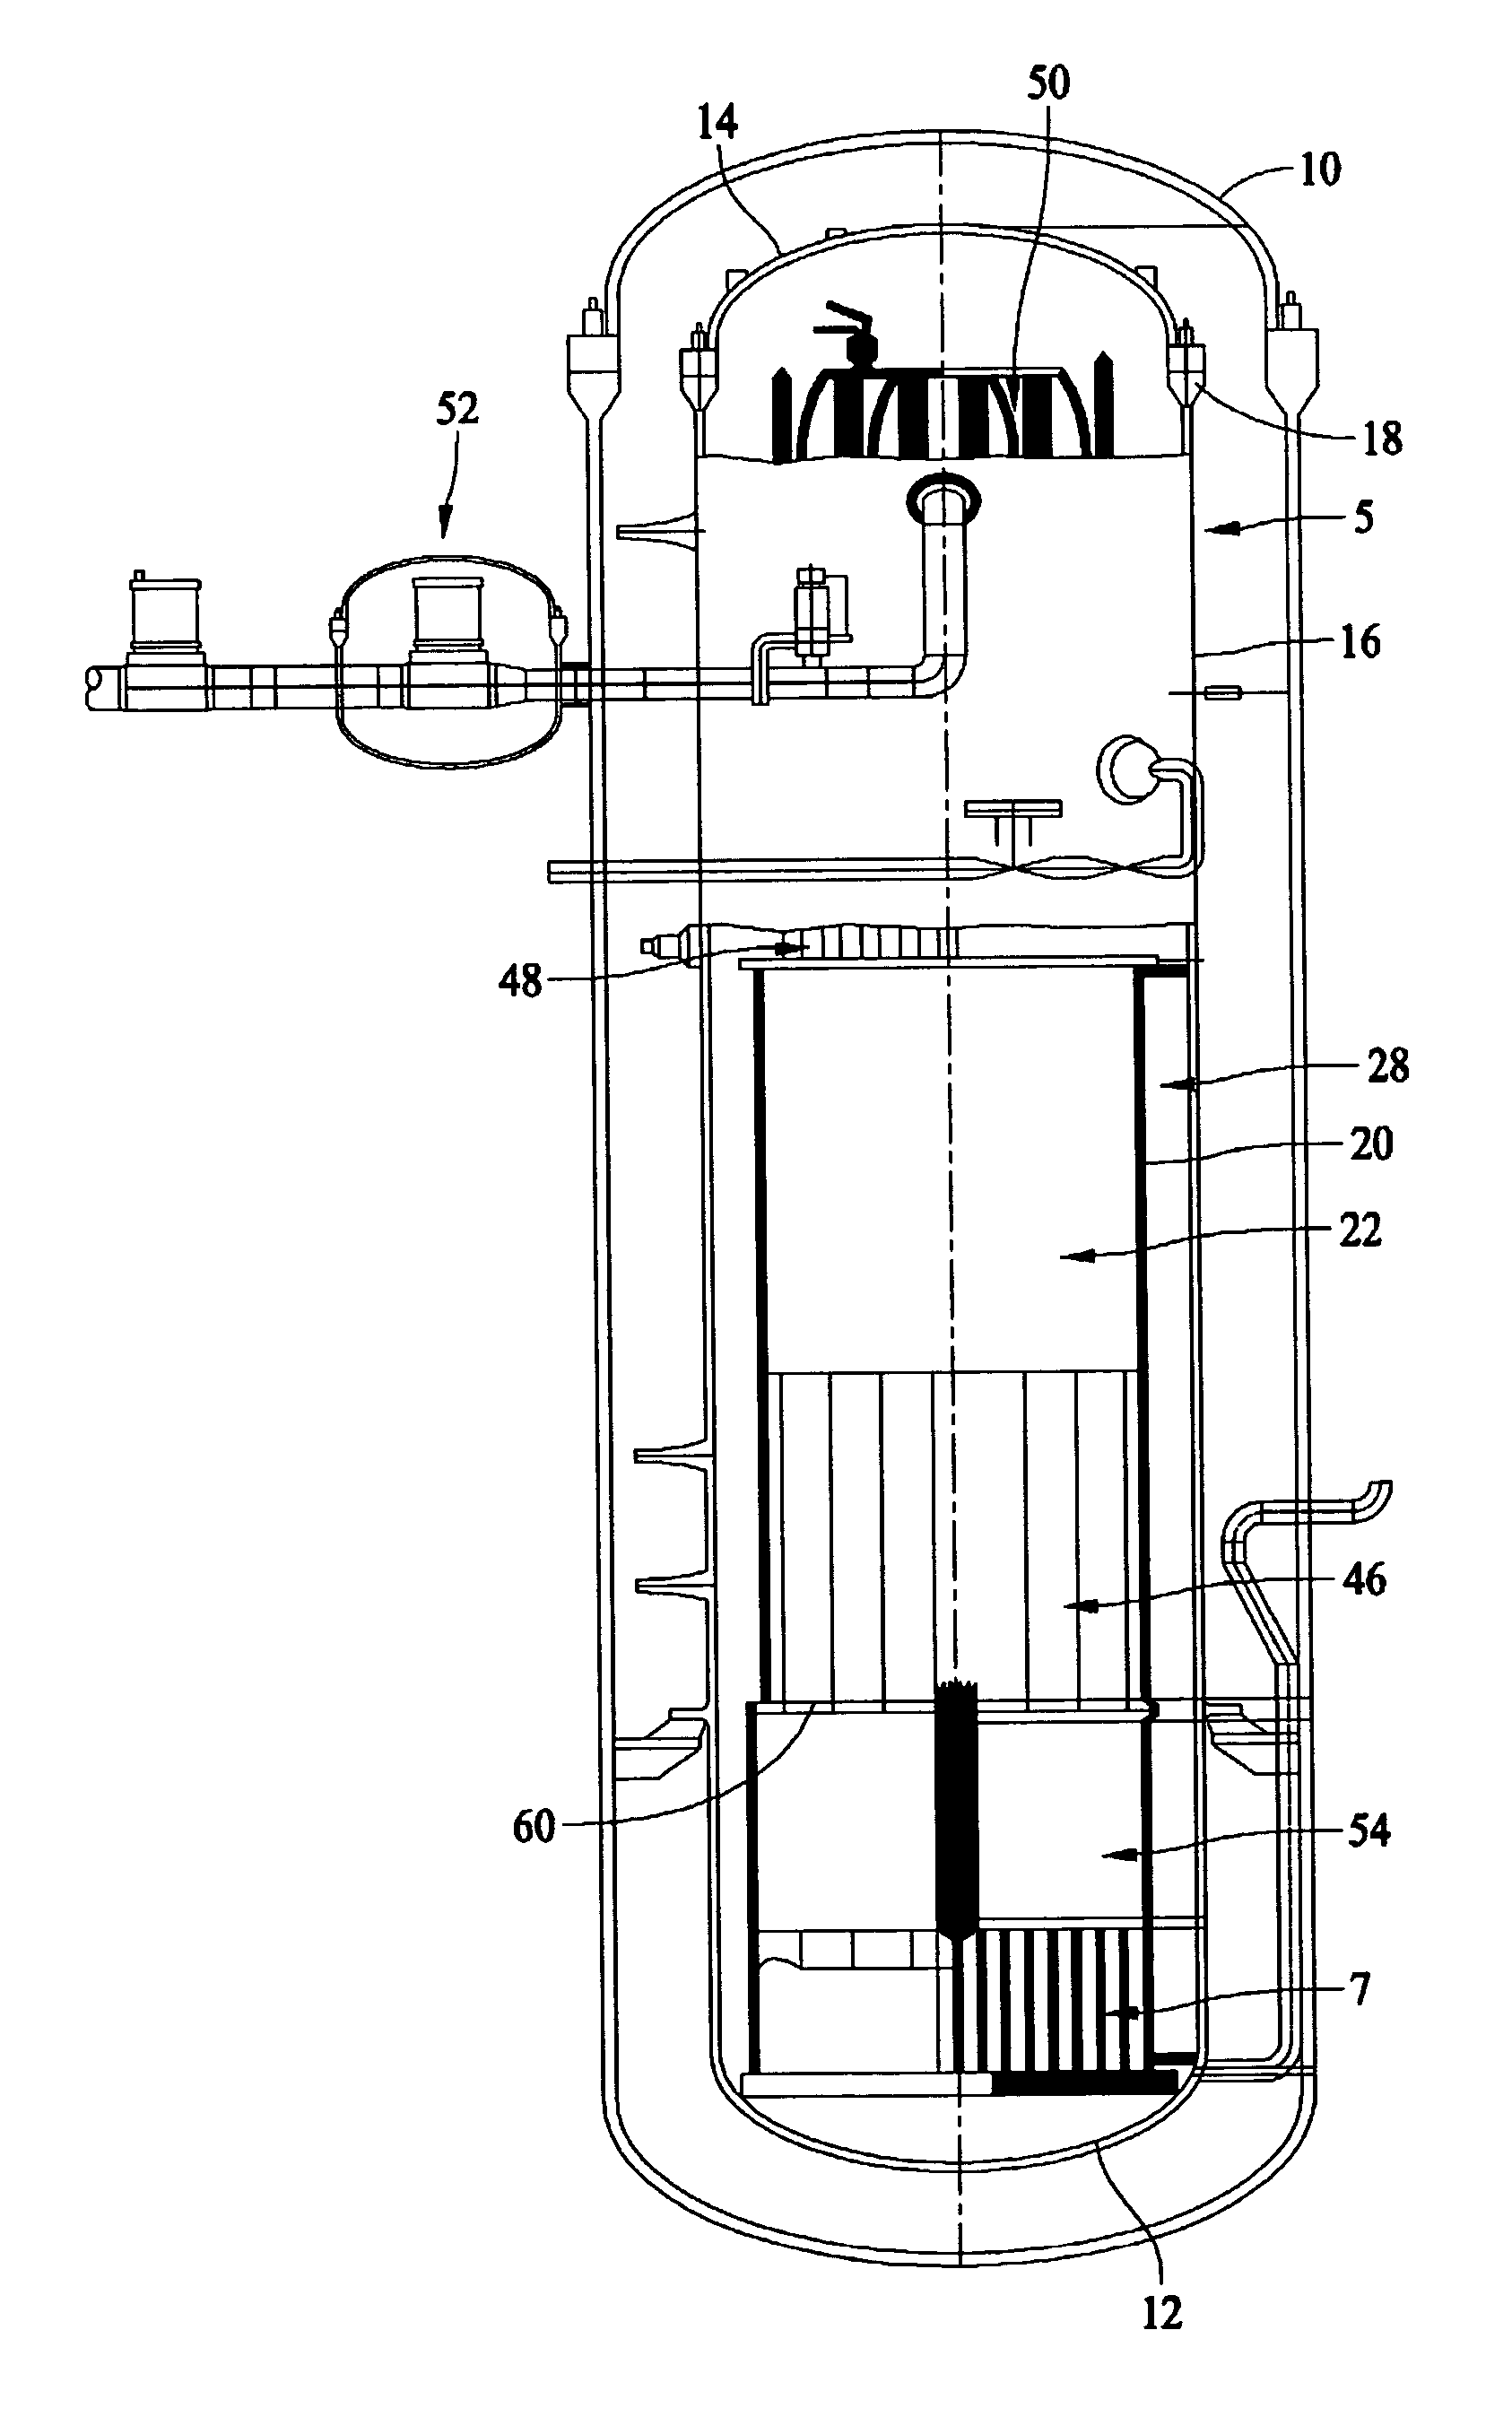 Modular reactor containment system